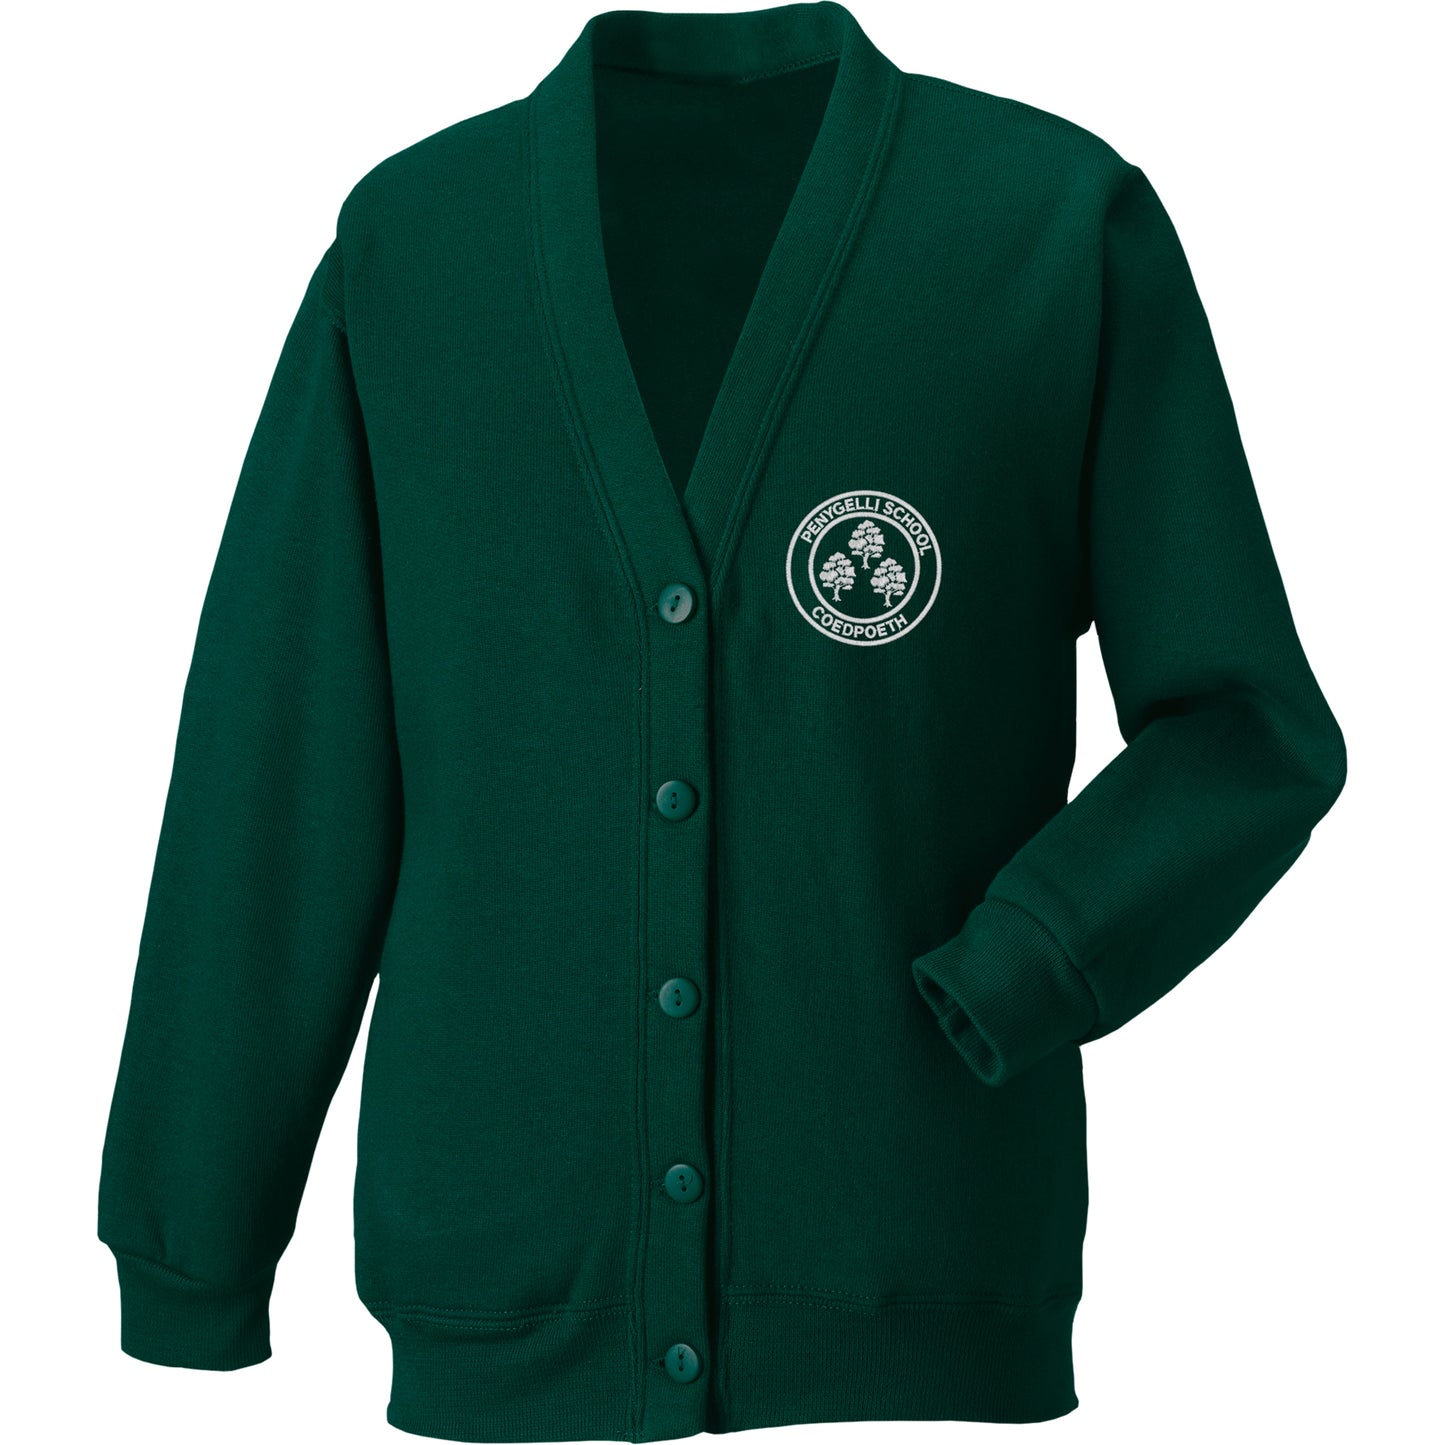 Ysgol Penygelli School uniform is supplied by Ourschoolwear of Wrexham ...